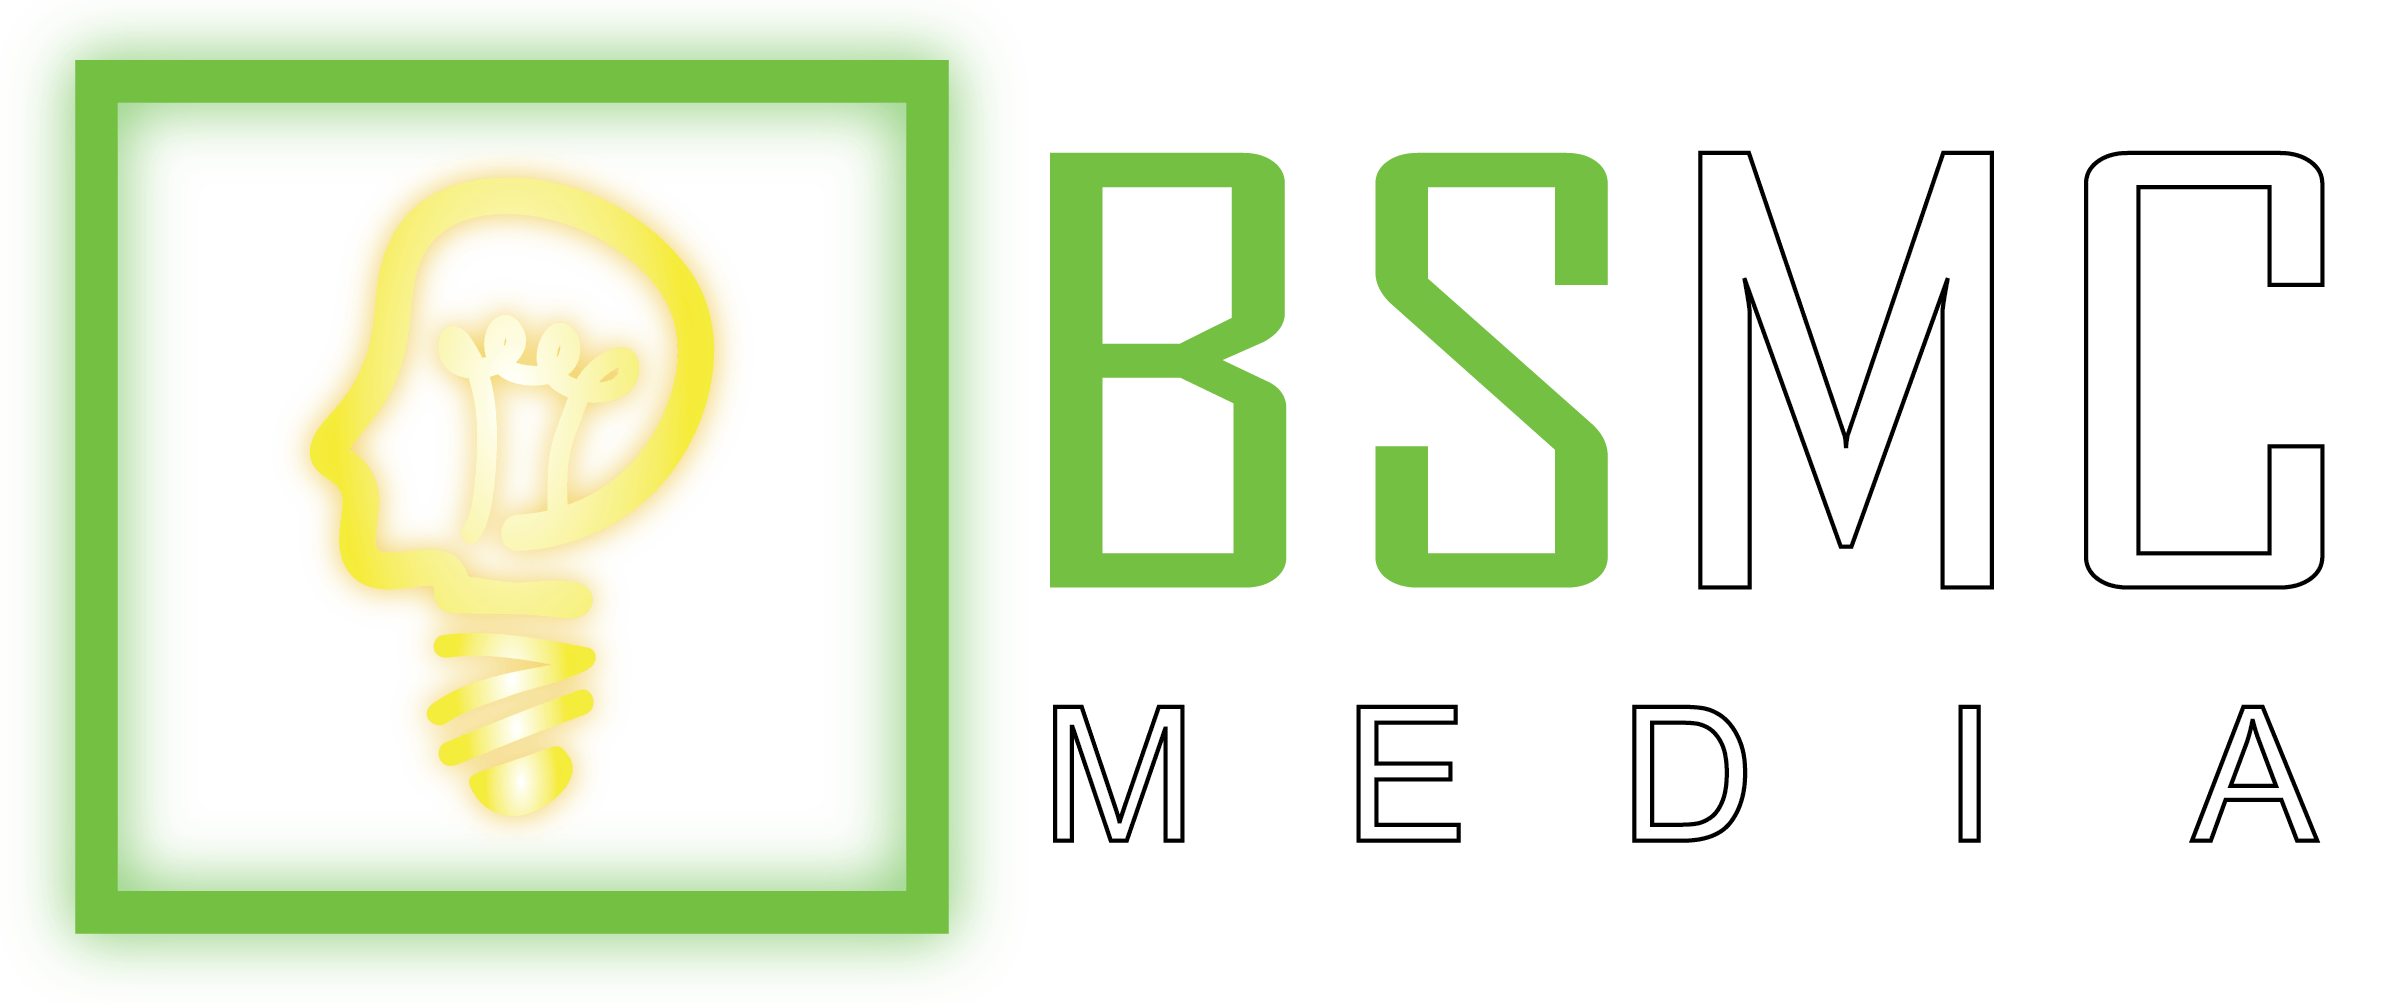 BSMC Logo - Digital Marketing Agency in Hackensack, NJ Specialize in Local